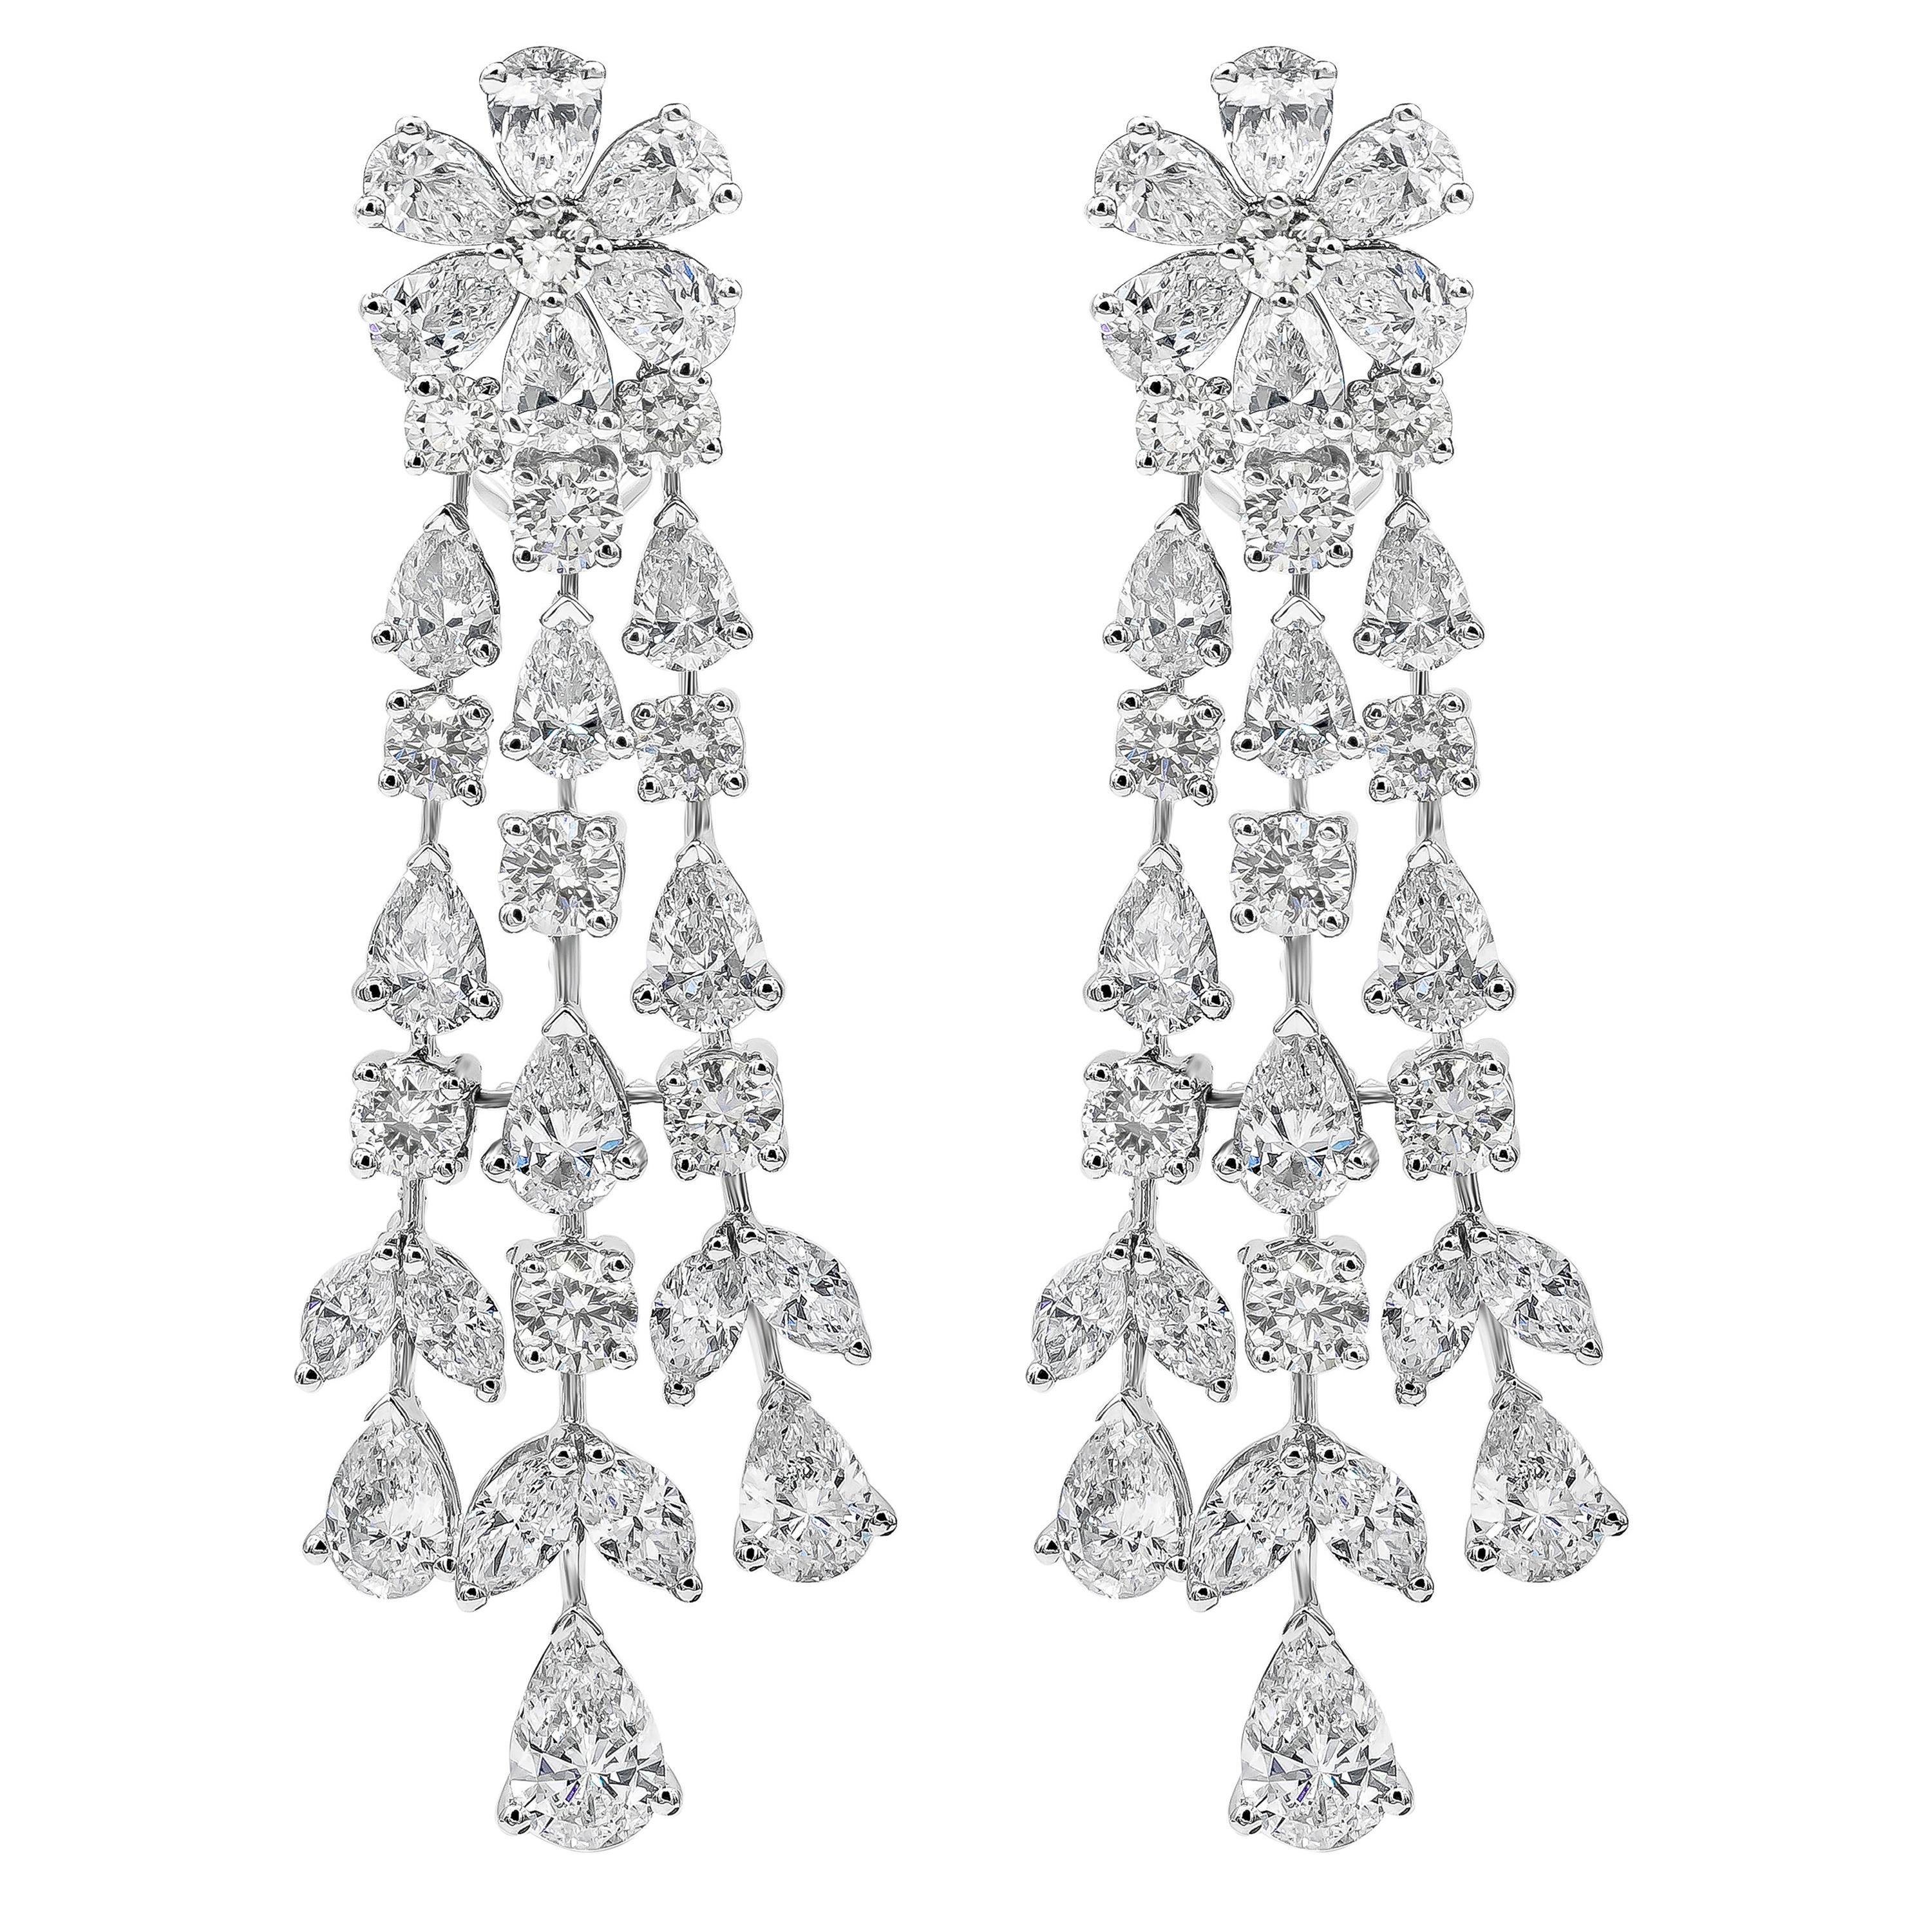 Roman Malakov 12.45 Carats Total Mixed Cut Diamond Chandelier Earrings